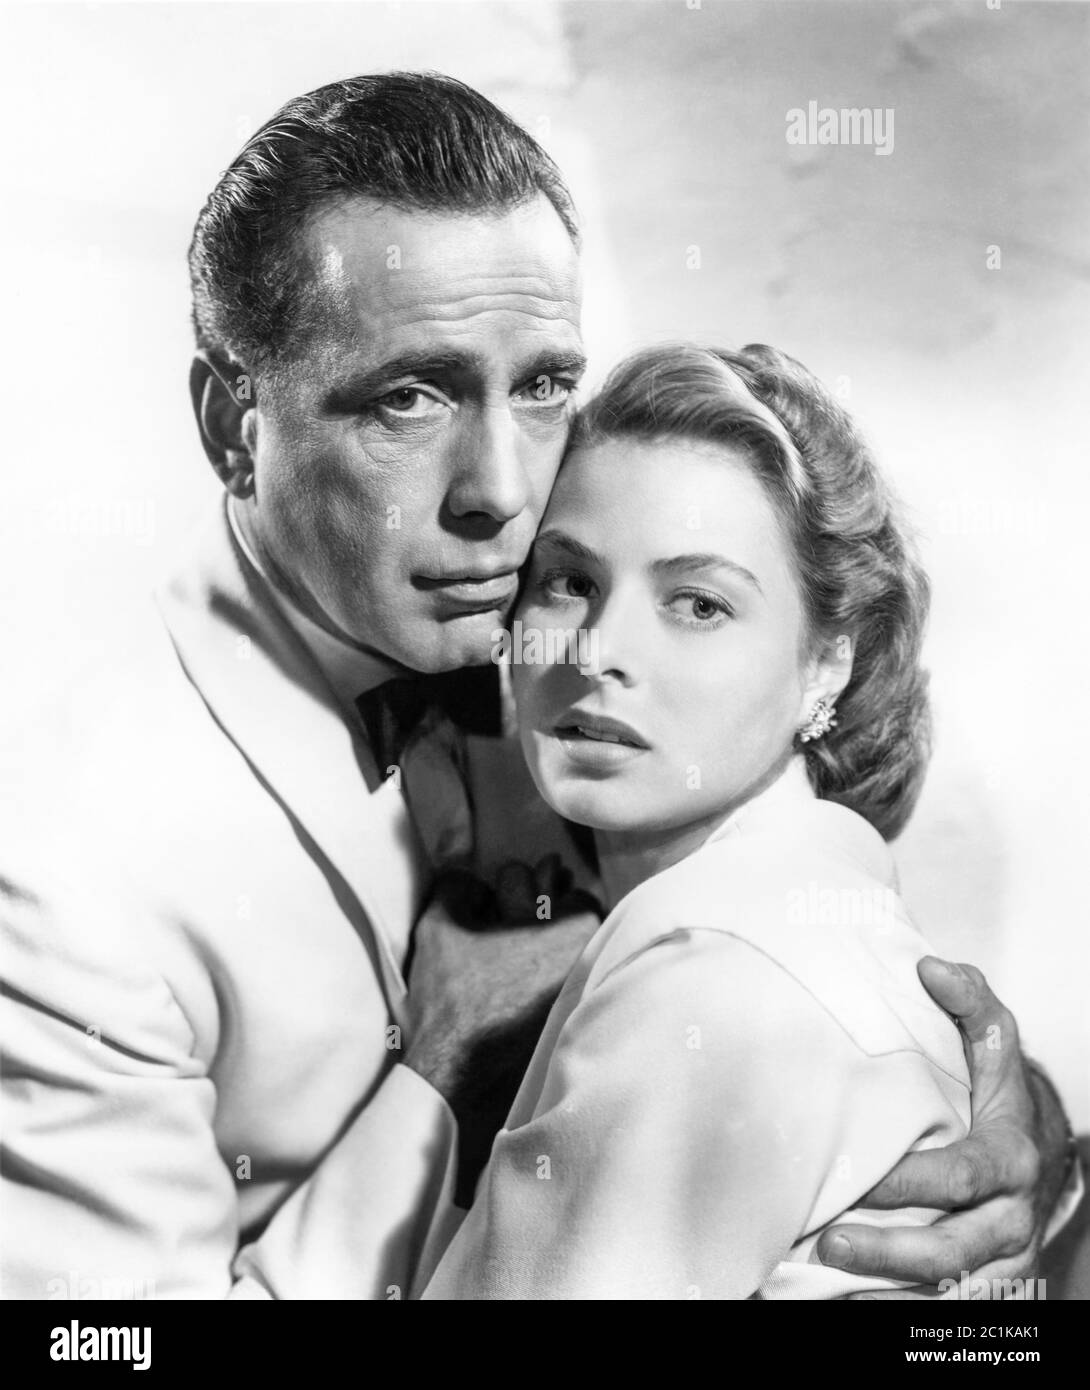 Film stars Humphrey Bogart and Ingrid Bergman from the 1942 classic film, Casablanca. Stock Photo